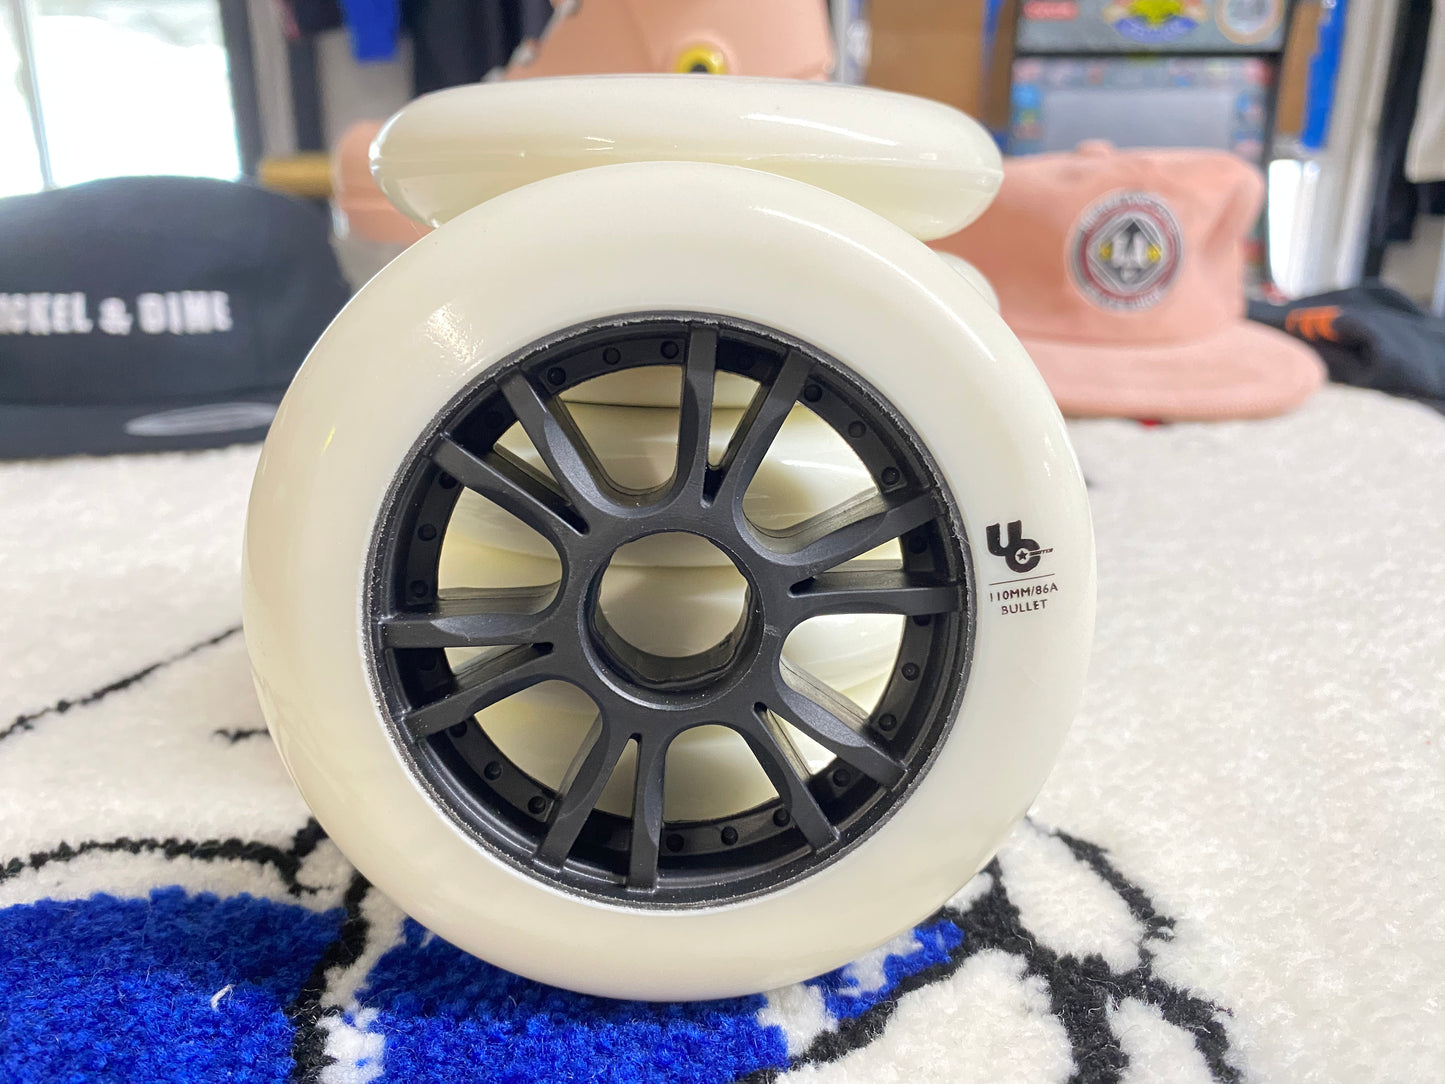 UnderCover Wheels 110mm 86a Bullet Profile inline skate wheels